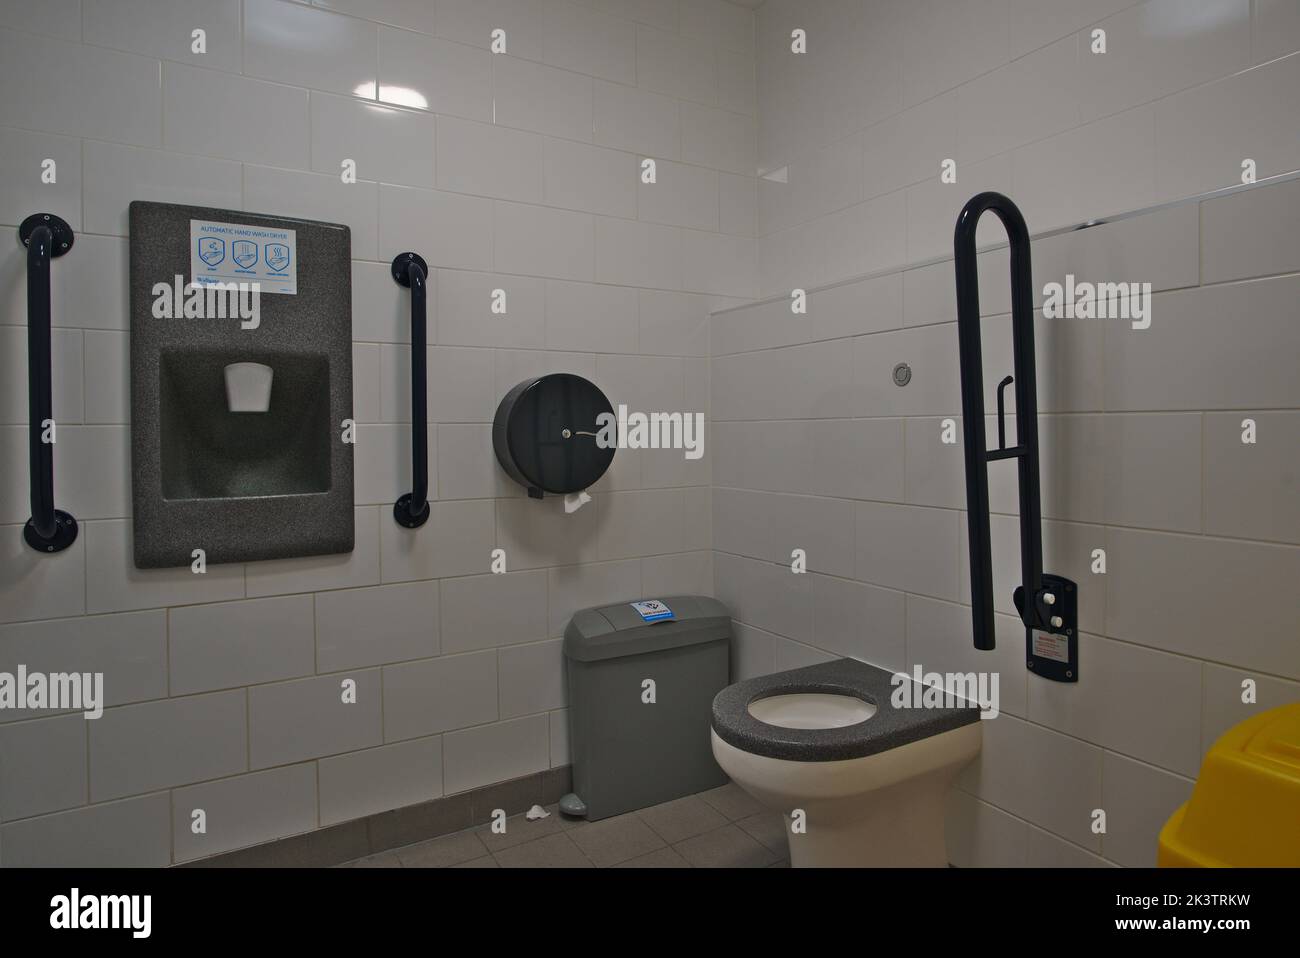 Interior of public toilet washroom Stock Photo